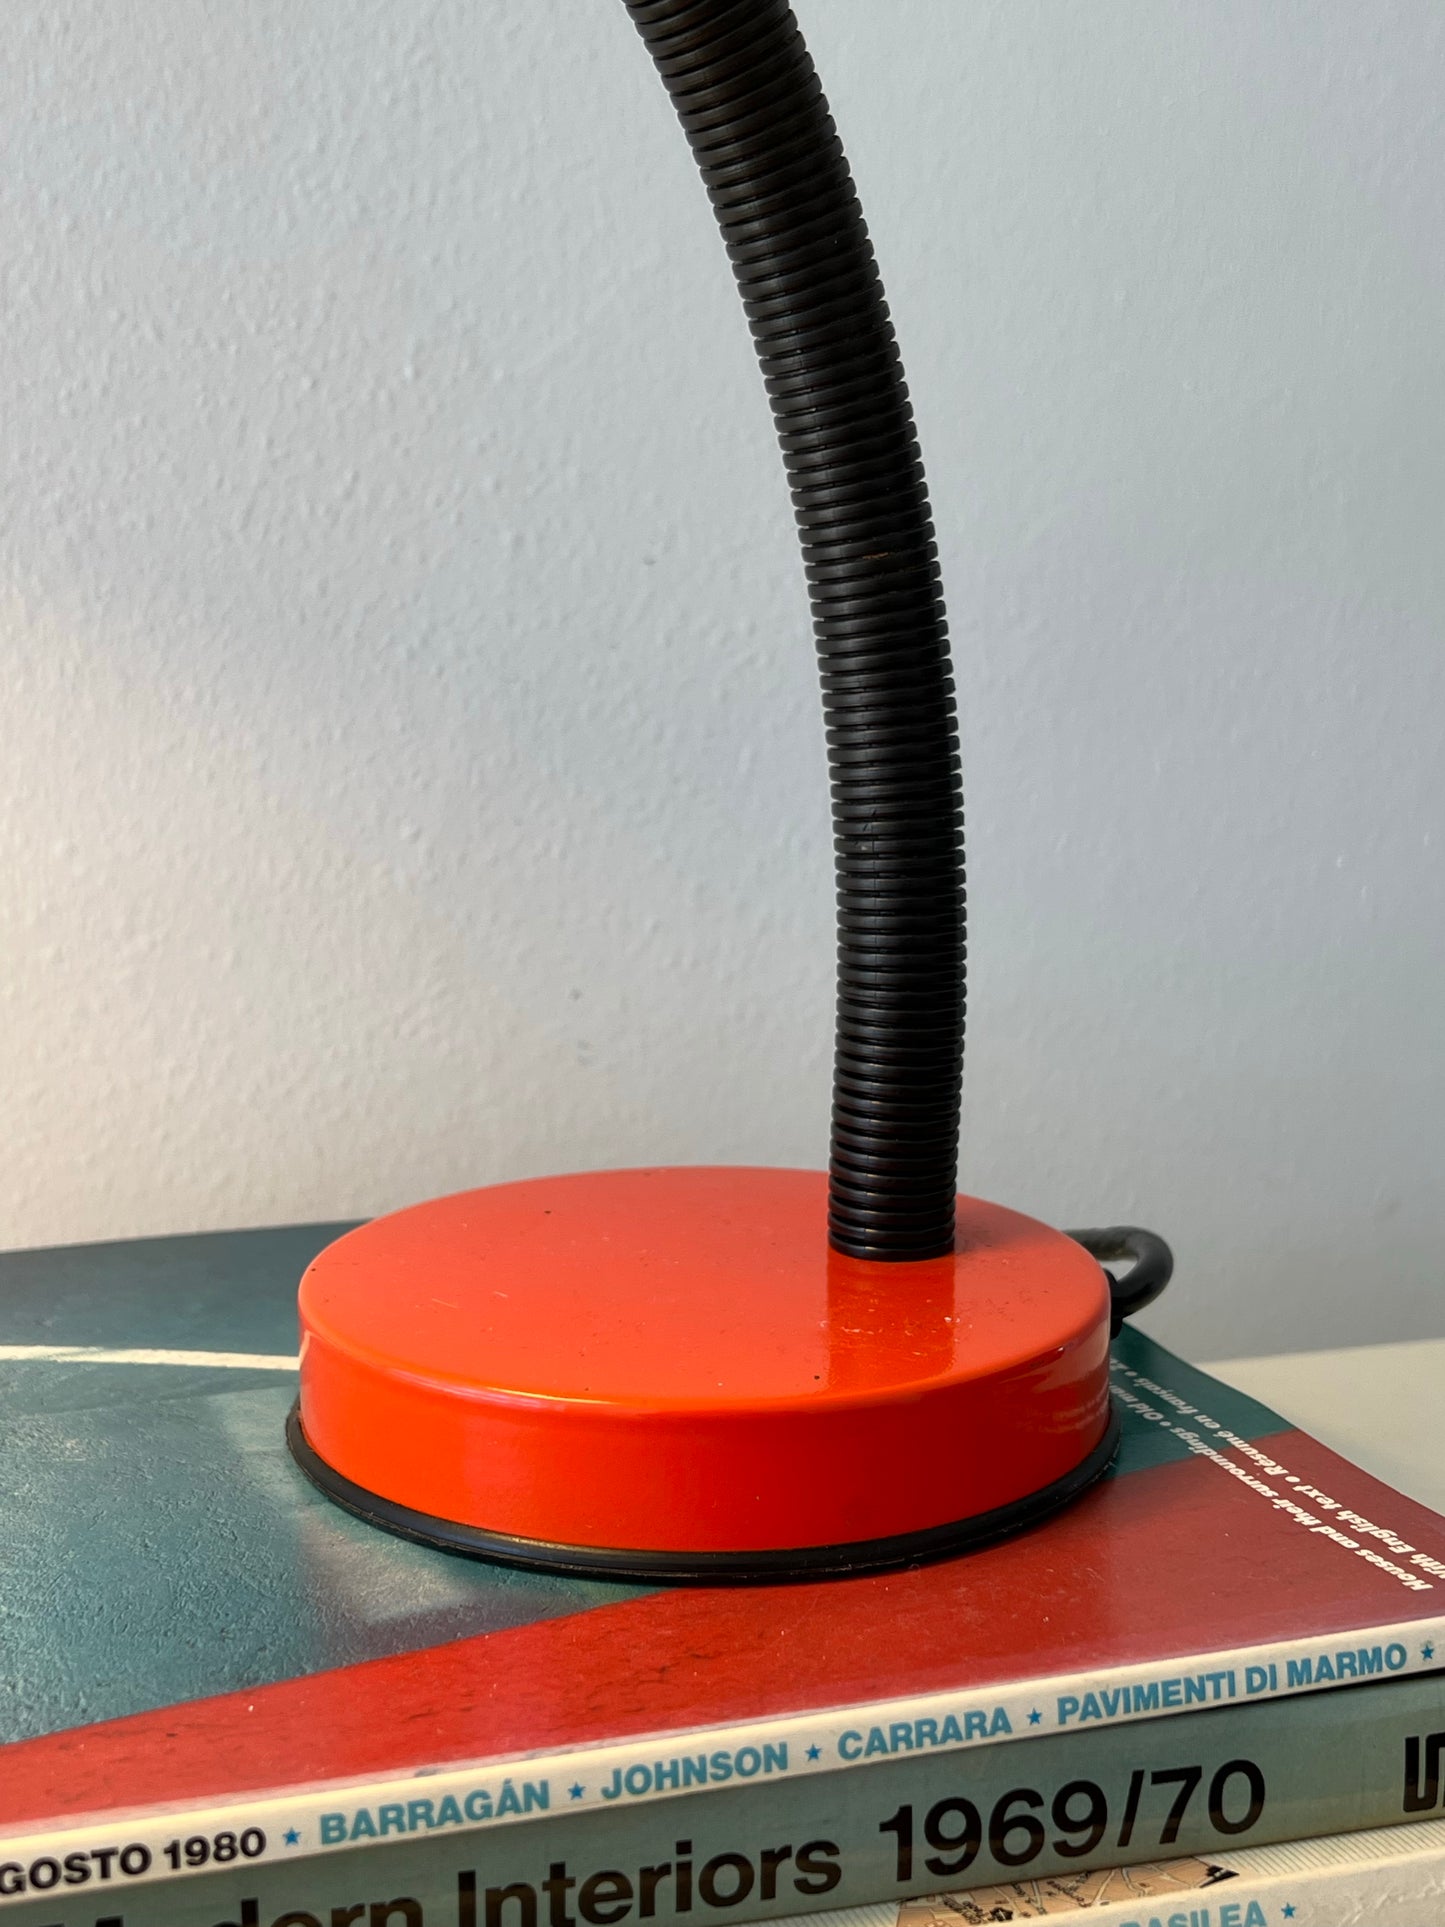 Orange Gooseneck Table Lamp